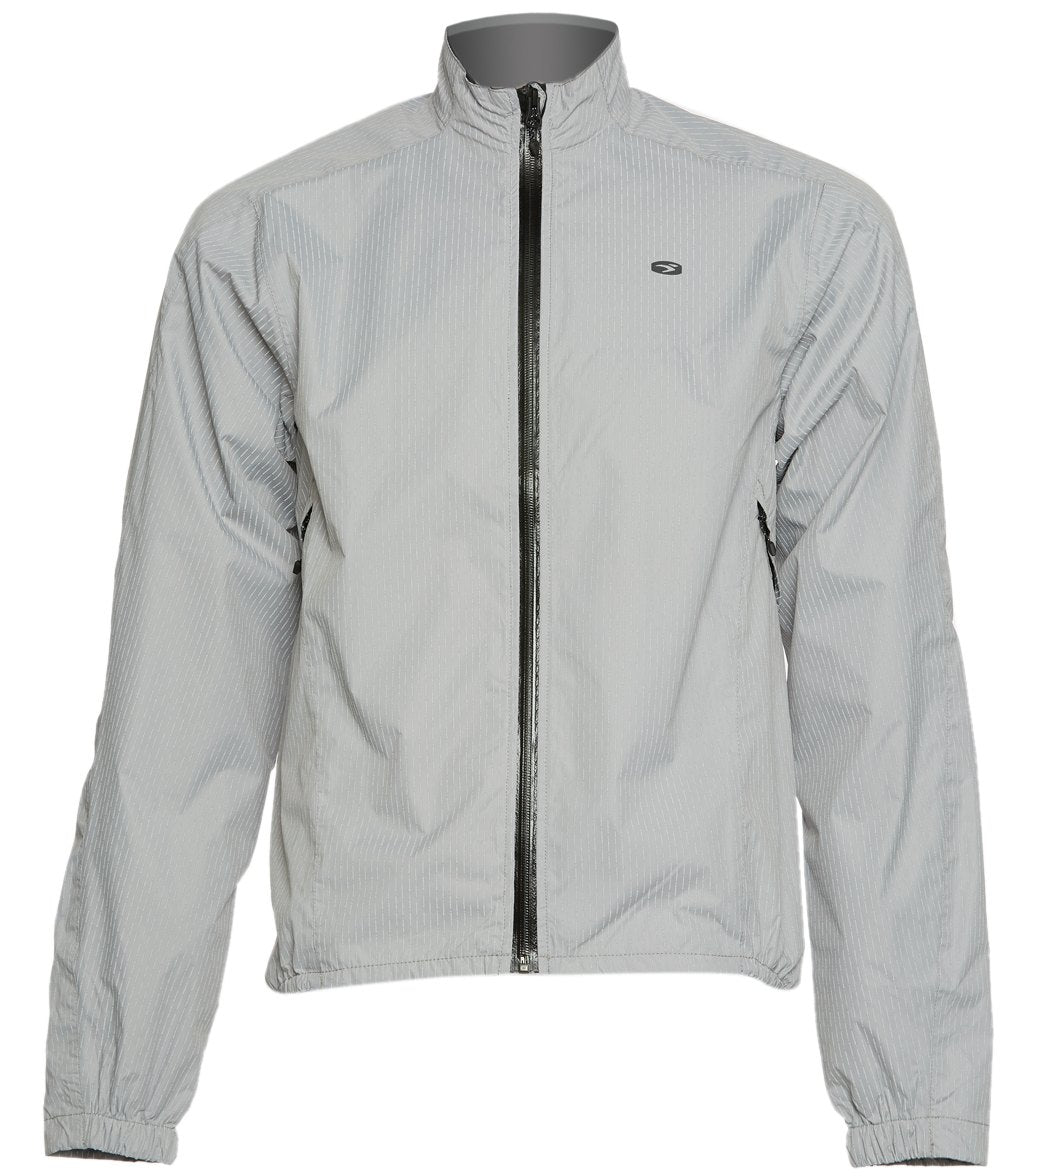 Sugoi Men's Zap Bike Jacket - Light Grey Medium Polyester - Swimoutlet.com